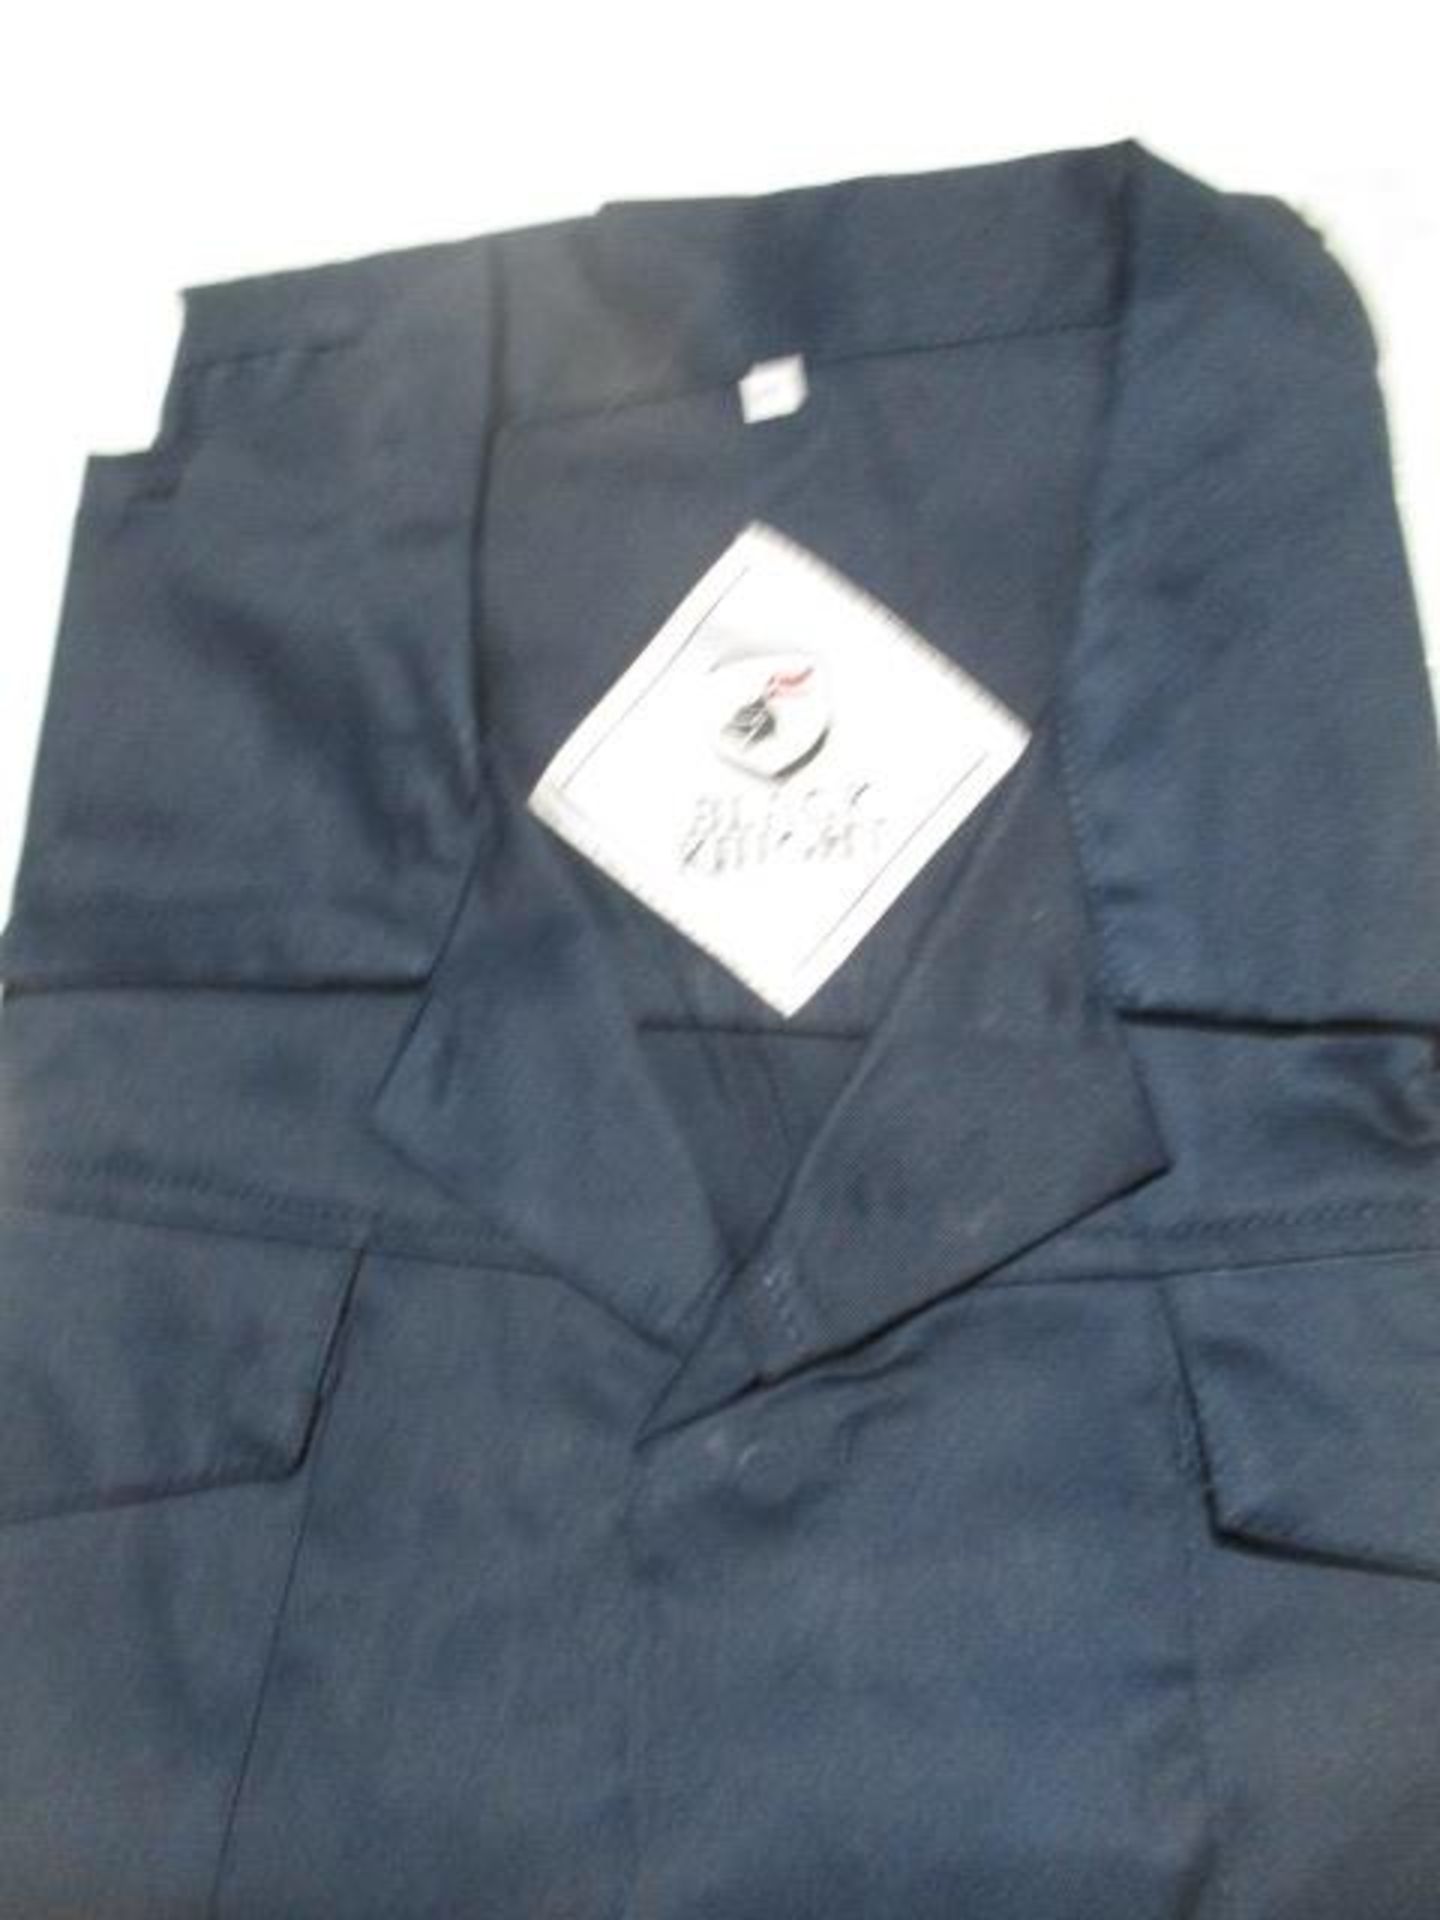 18pcs brand new Boiler suit Navy blue - Image 2 of 3